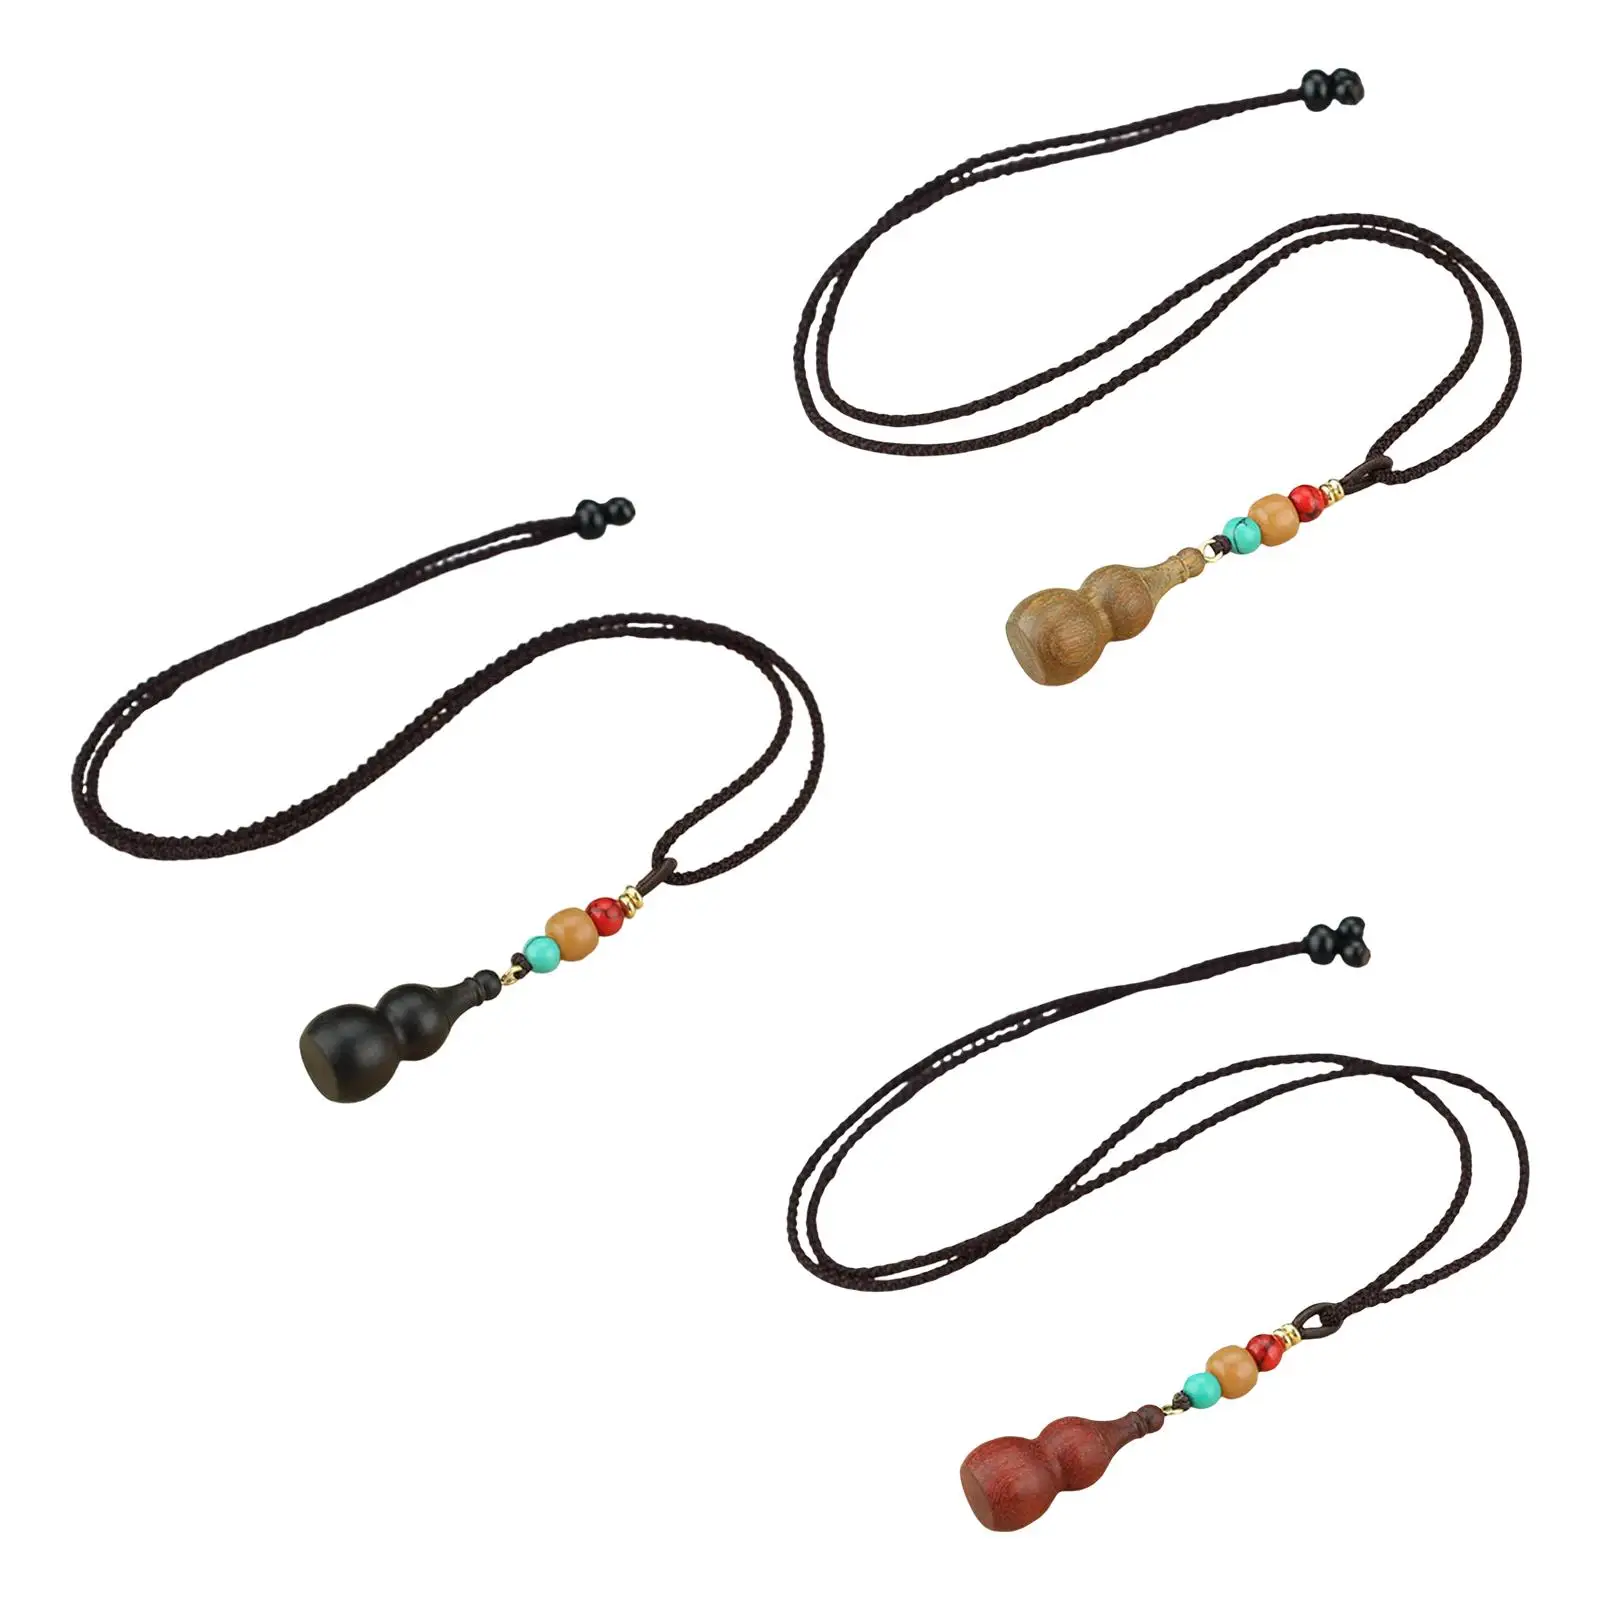 Vintage Style Long Necklaces, Decor Charms Necklace, Sweater Link Chain Ornament, Adjustable Screwable Gourd Pendant Necklace